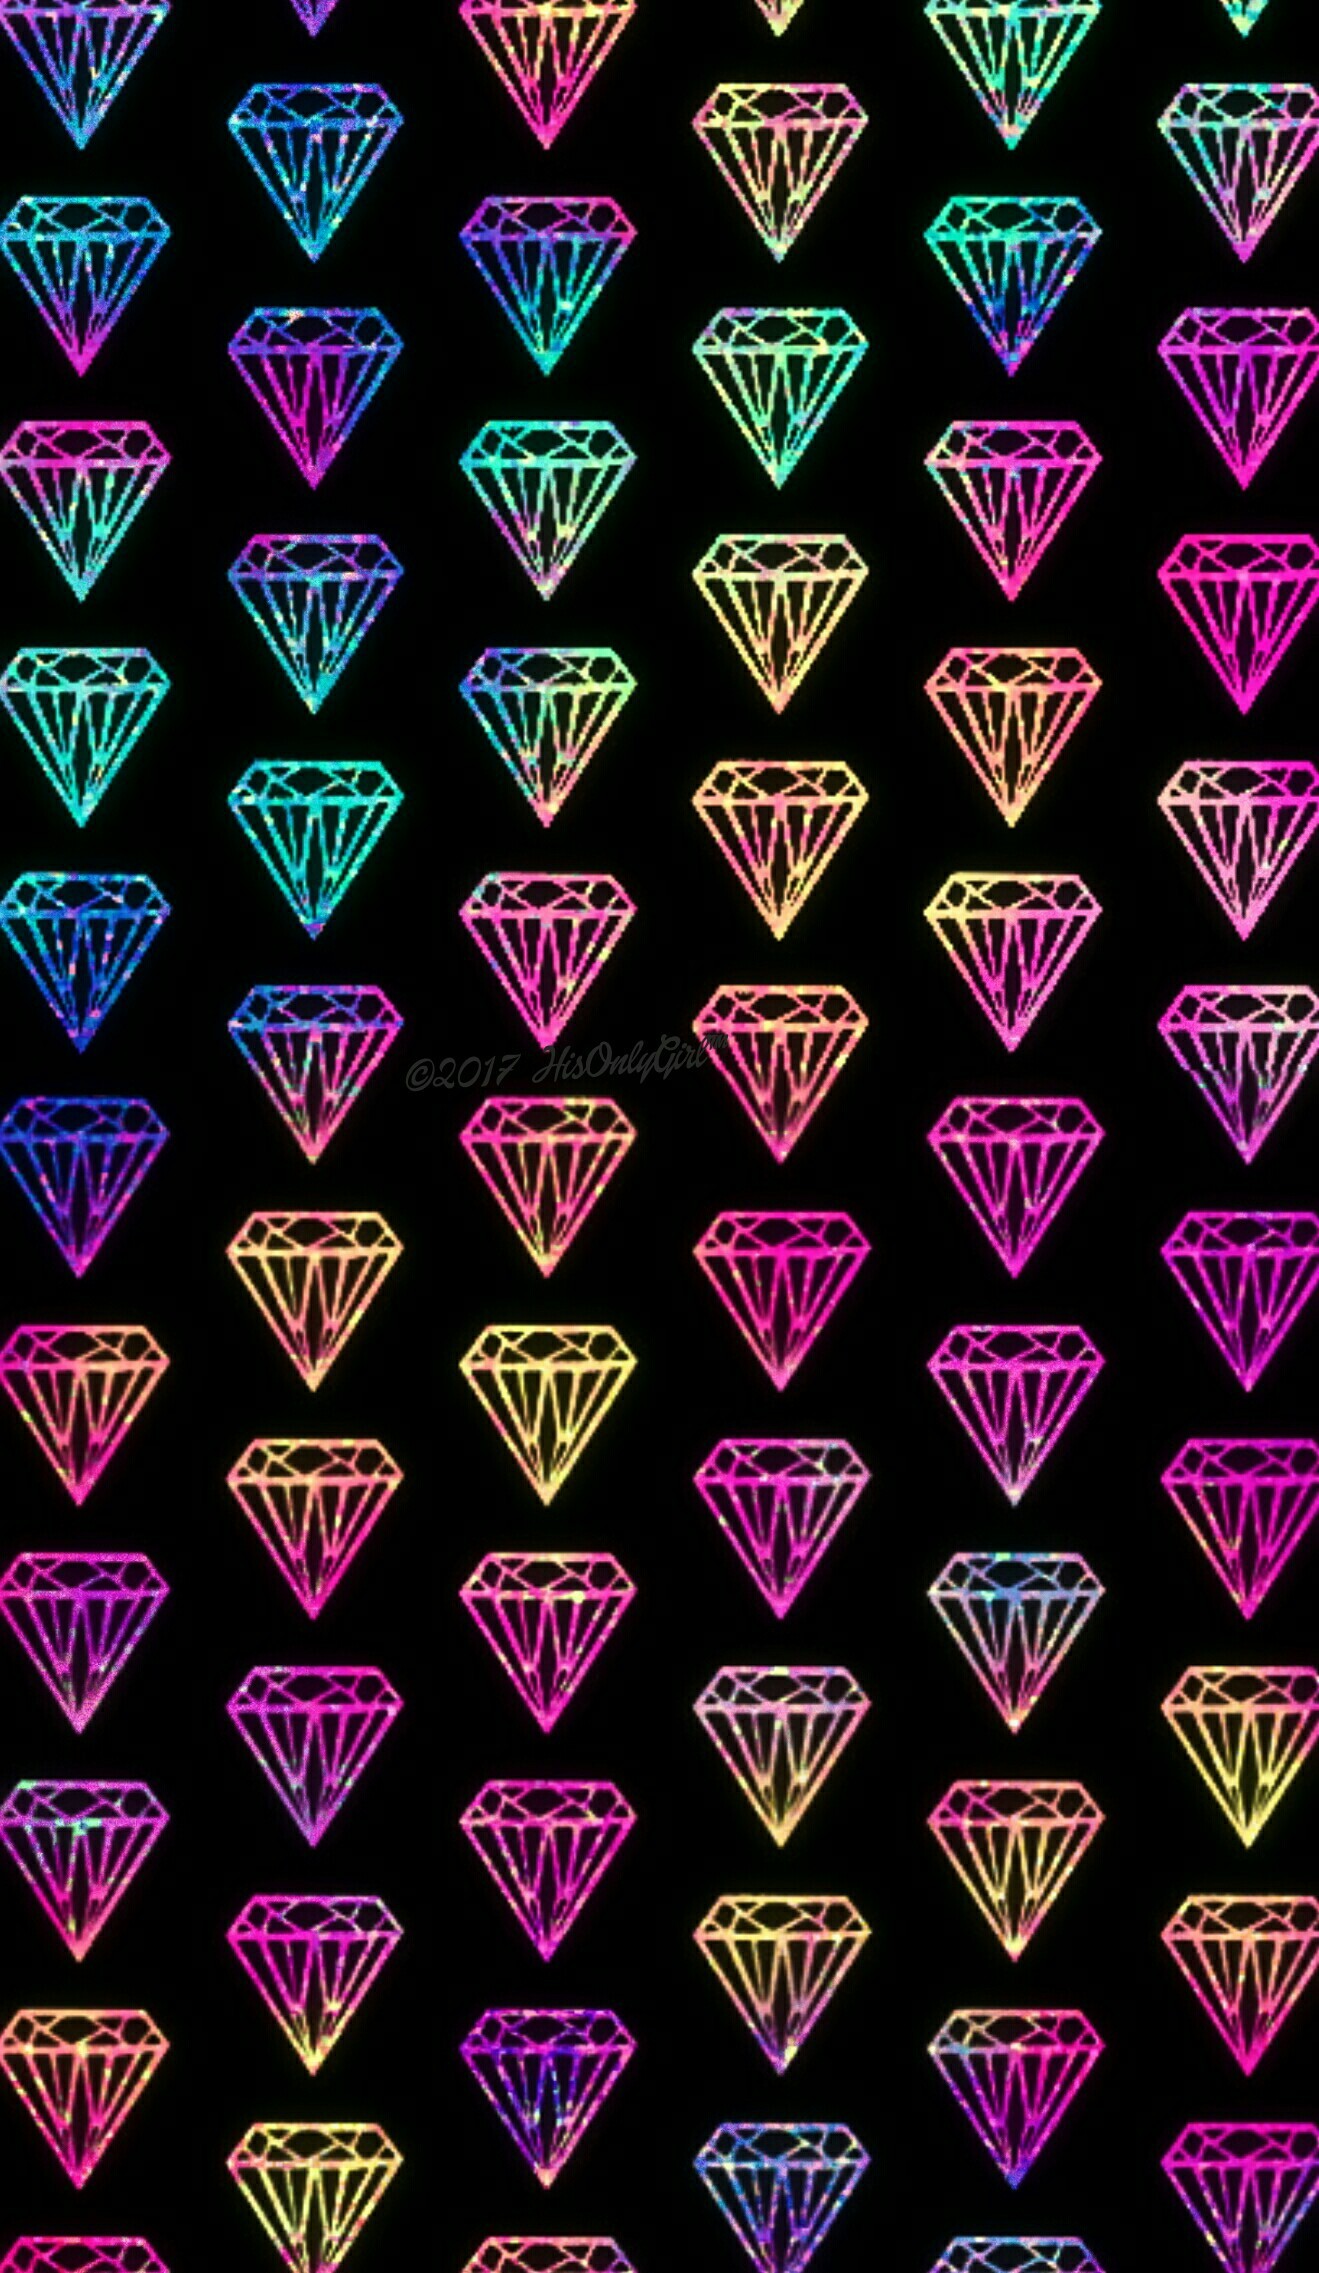 Diamond rainbow galaxy wallpaper I created for the app CocoPPa